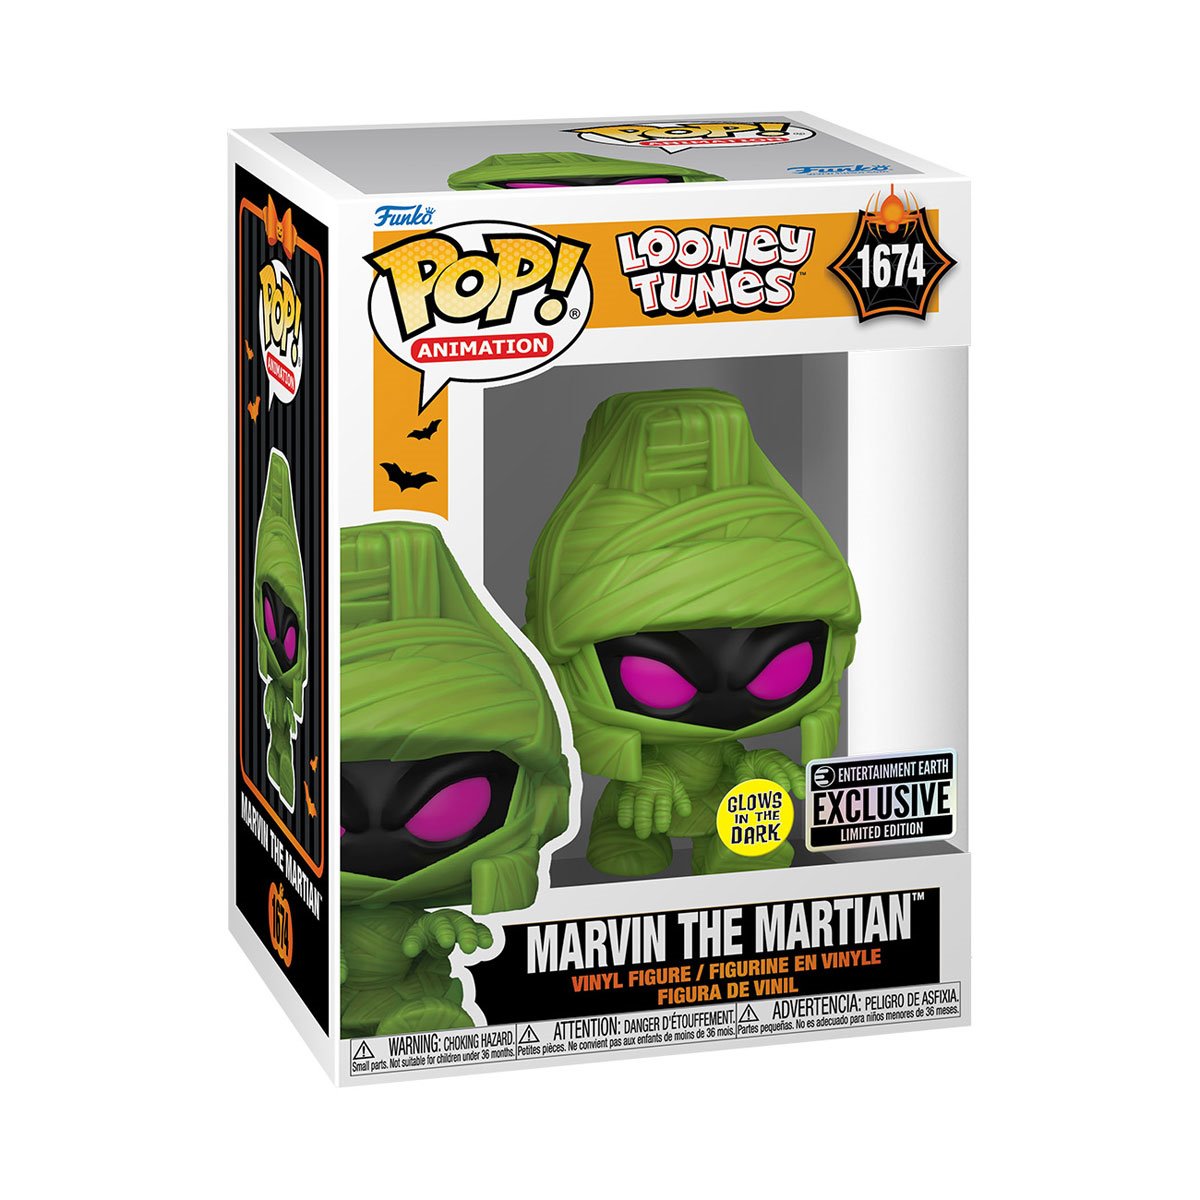 Looney Tunes Marvin the Martian Glow In The Dark Funko Pop! Vinyl Figure With Protector - EE Excl.